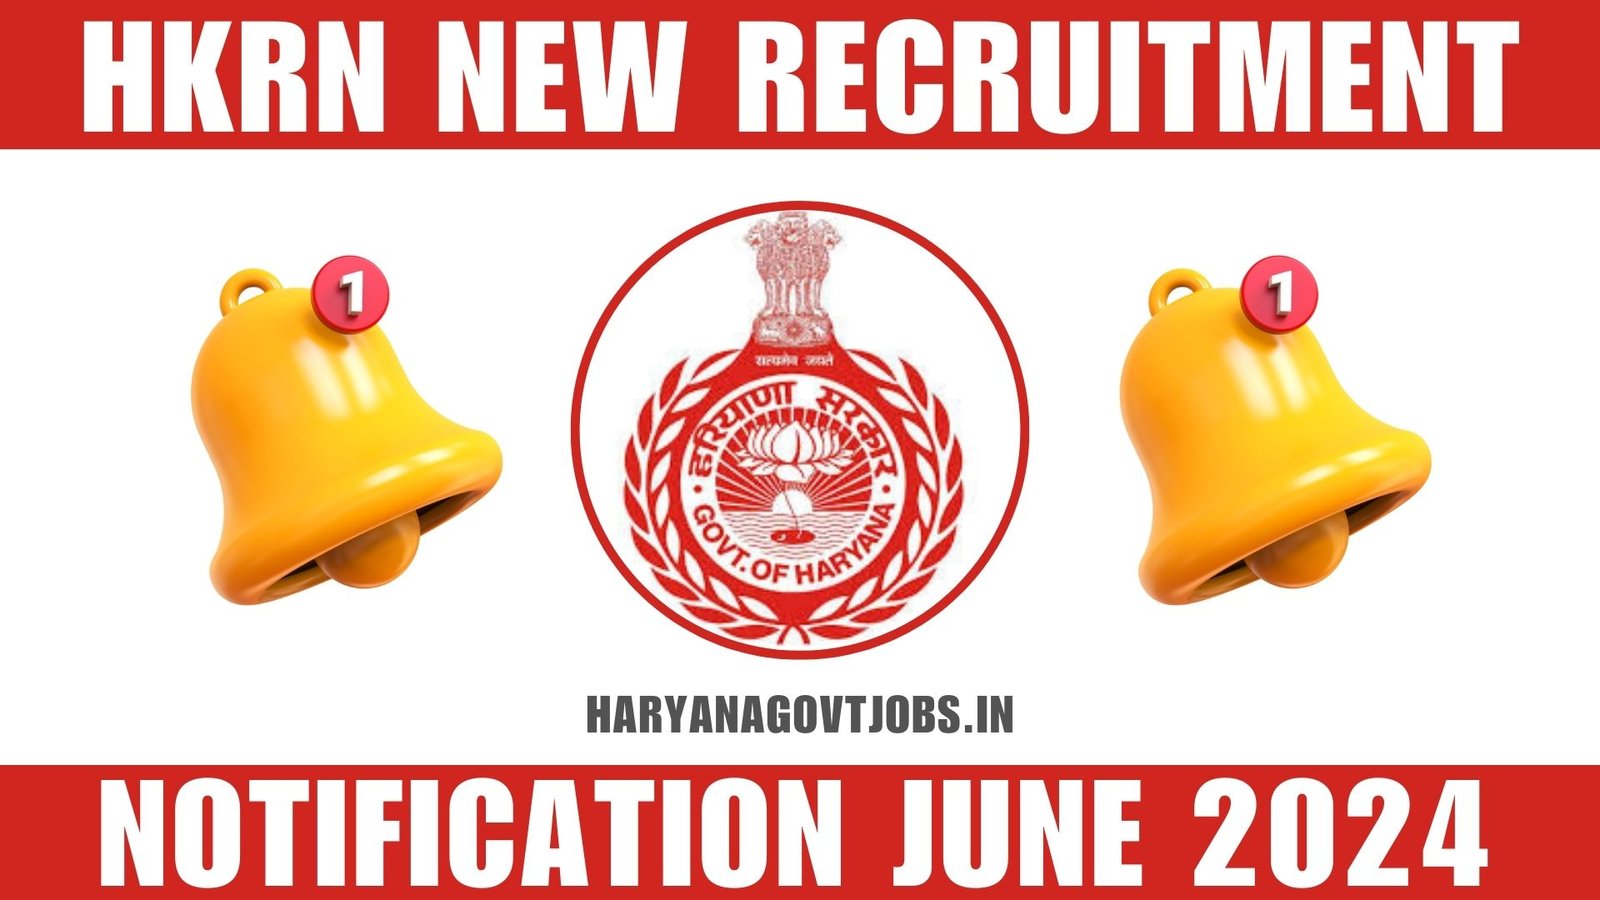 HKRN New Recruitment Notification June 2024 Apply Online: Overview